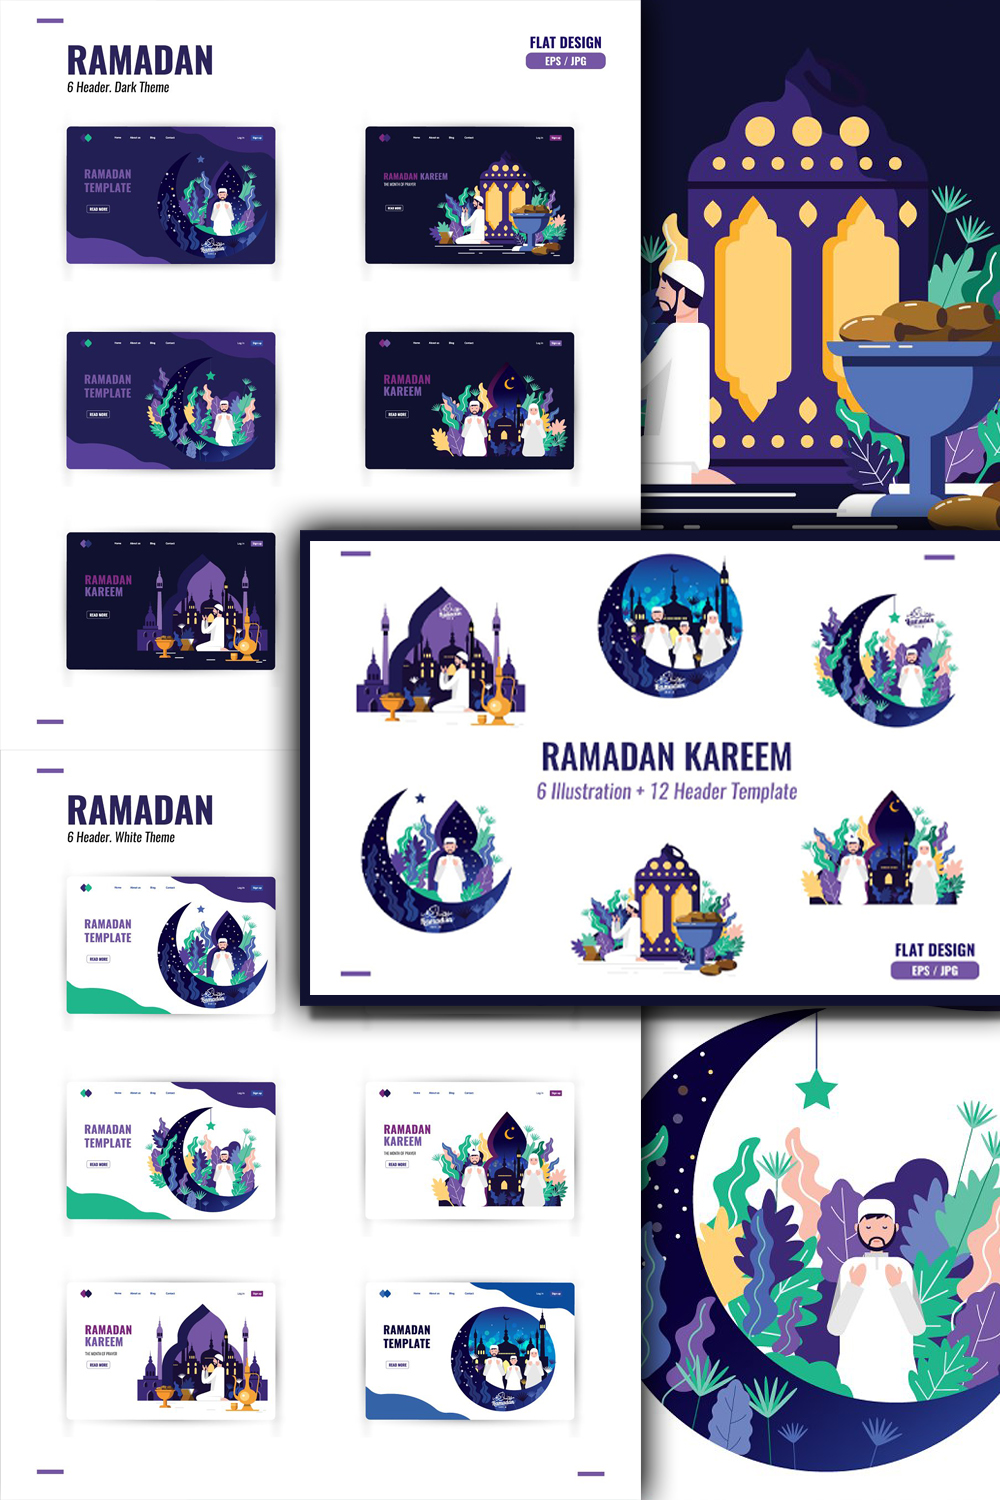 Ramadan illustration and web header of pinterest.